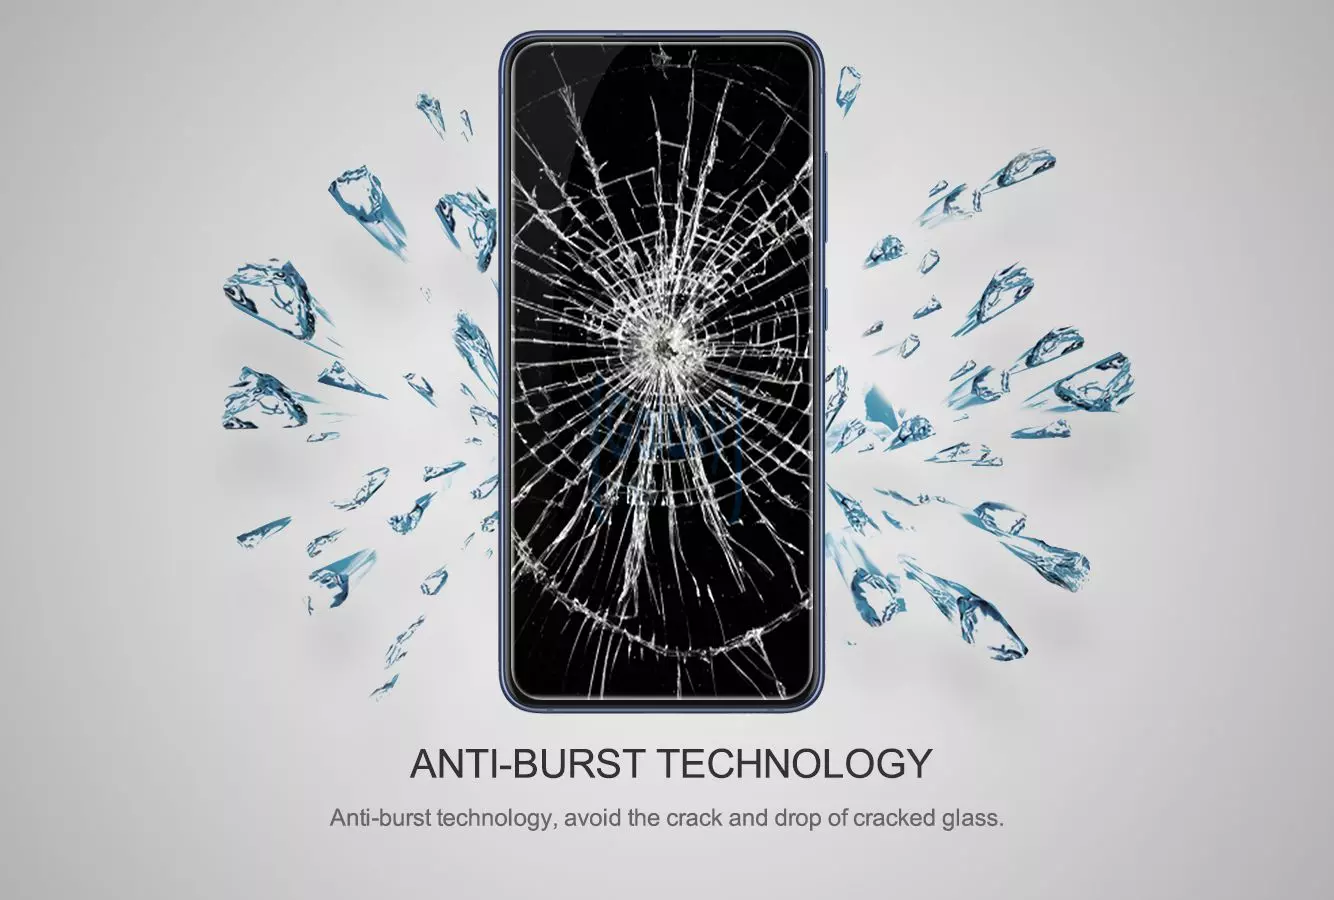 Защитное стекло для Samsung Galaxy S21 FE Nillkin CP+ PRO Black (Черный)